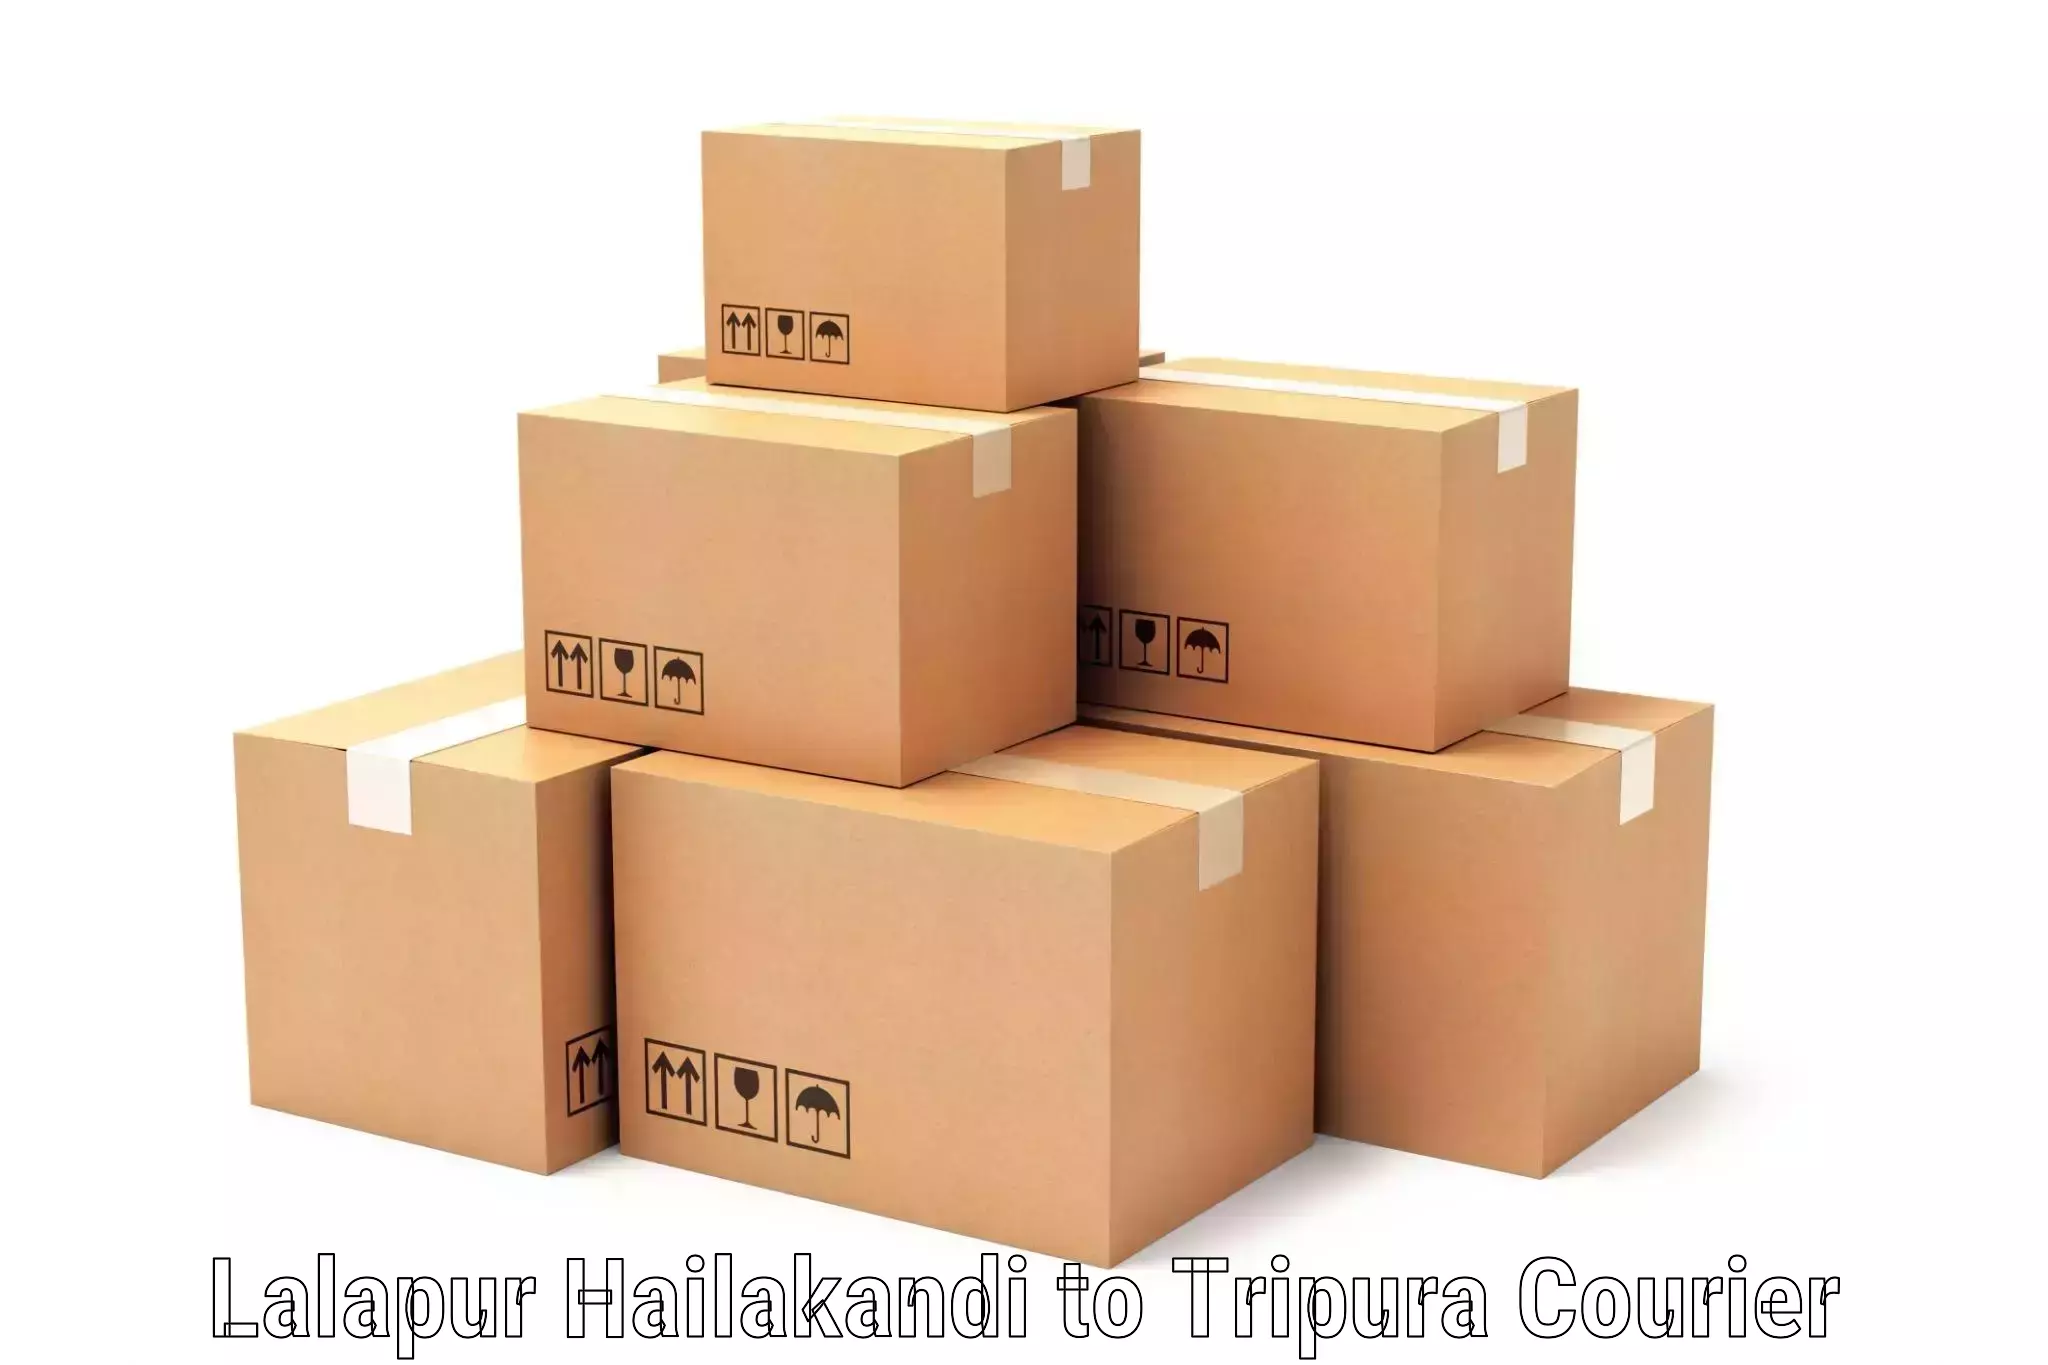 High-speed parcel service Lalapur Hailakandi to Bishalgarh